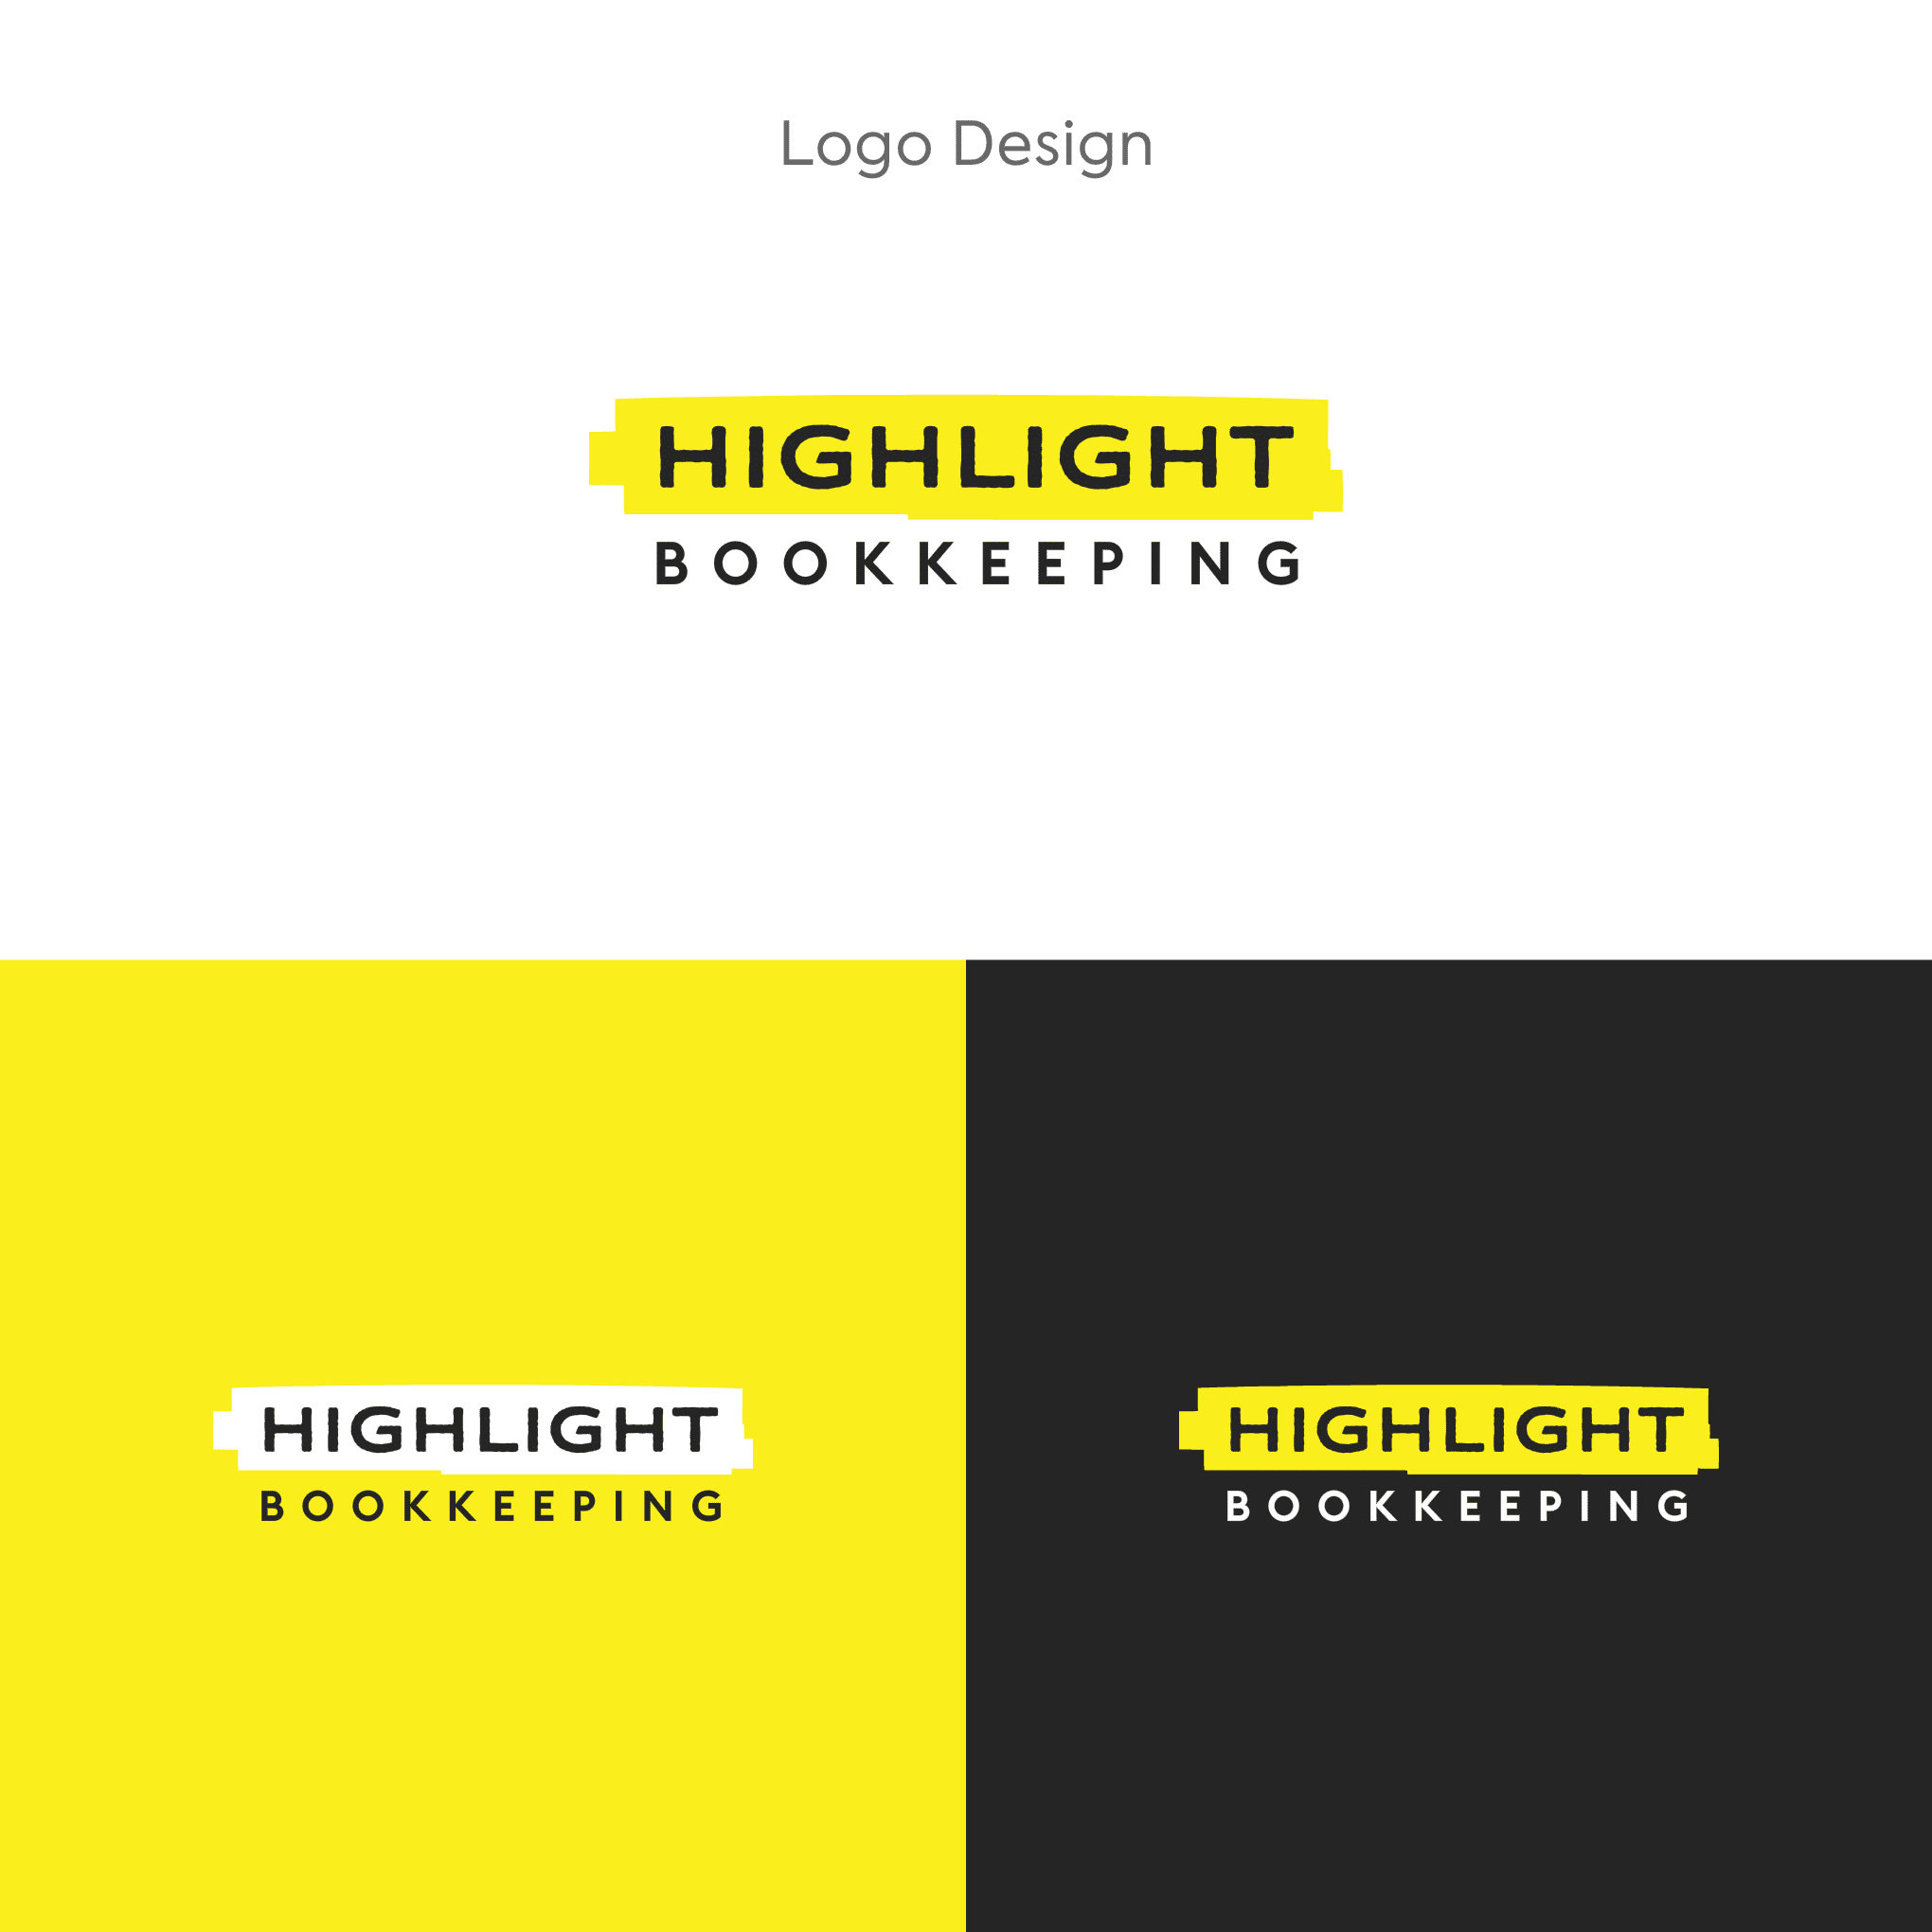 01 - Logo Design (2)